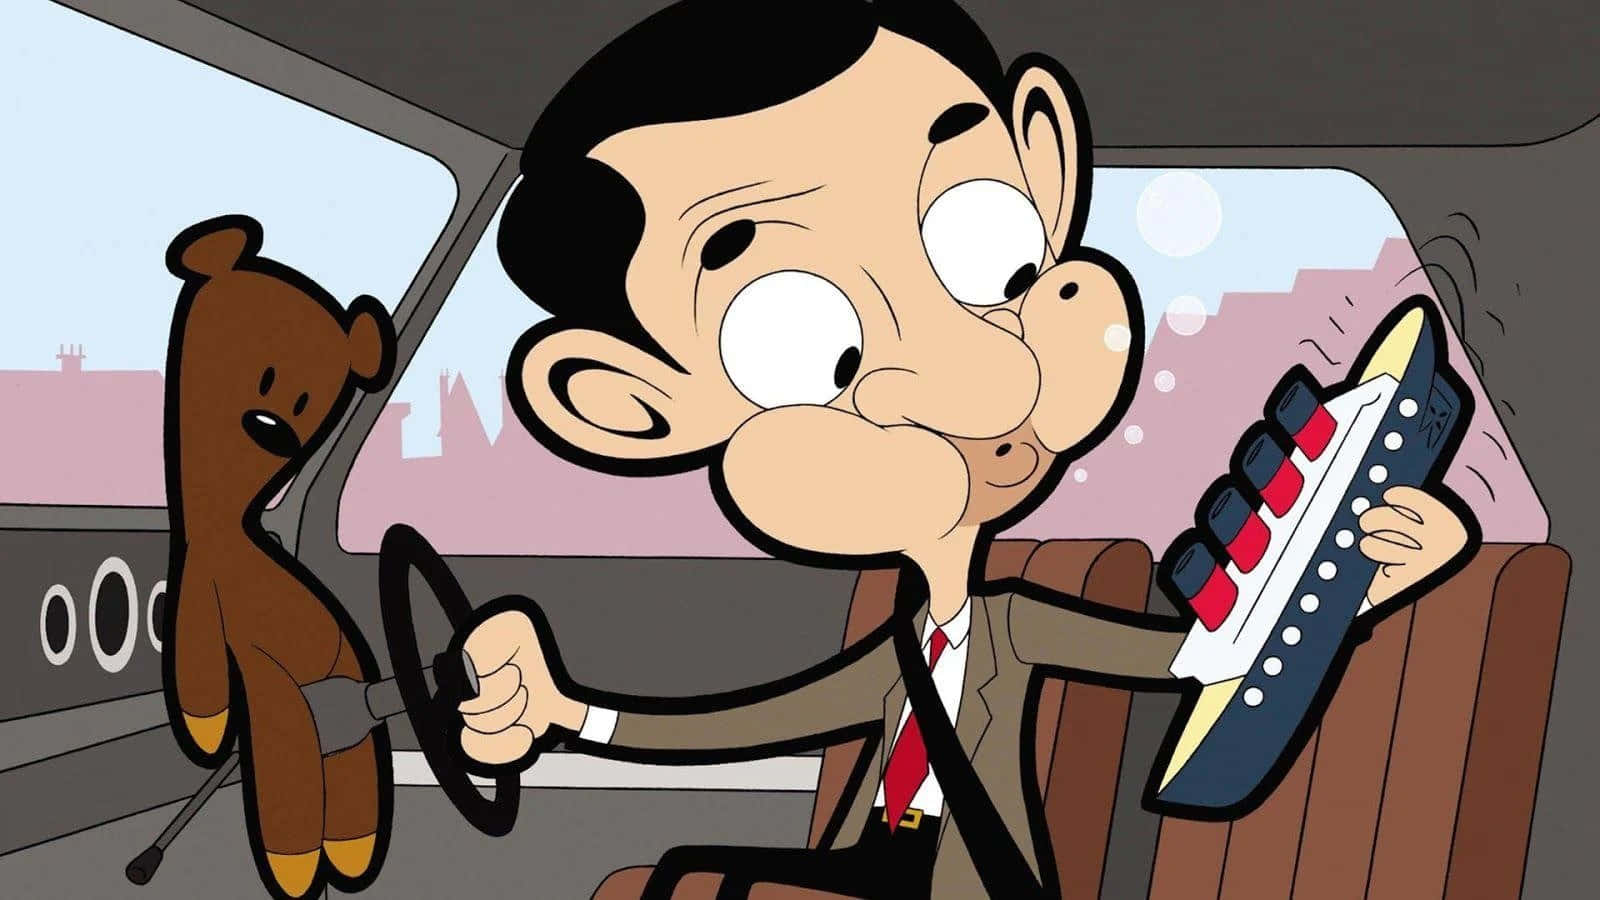 "A Smiling Mr. Bean in His Signature Suit"